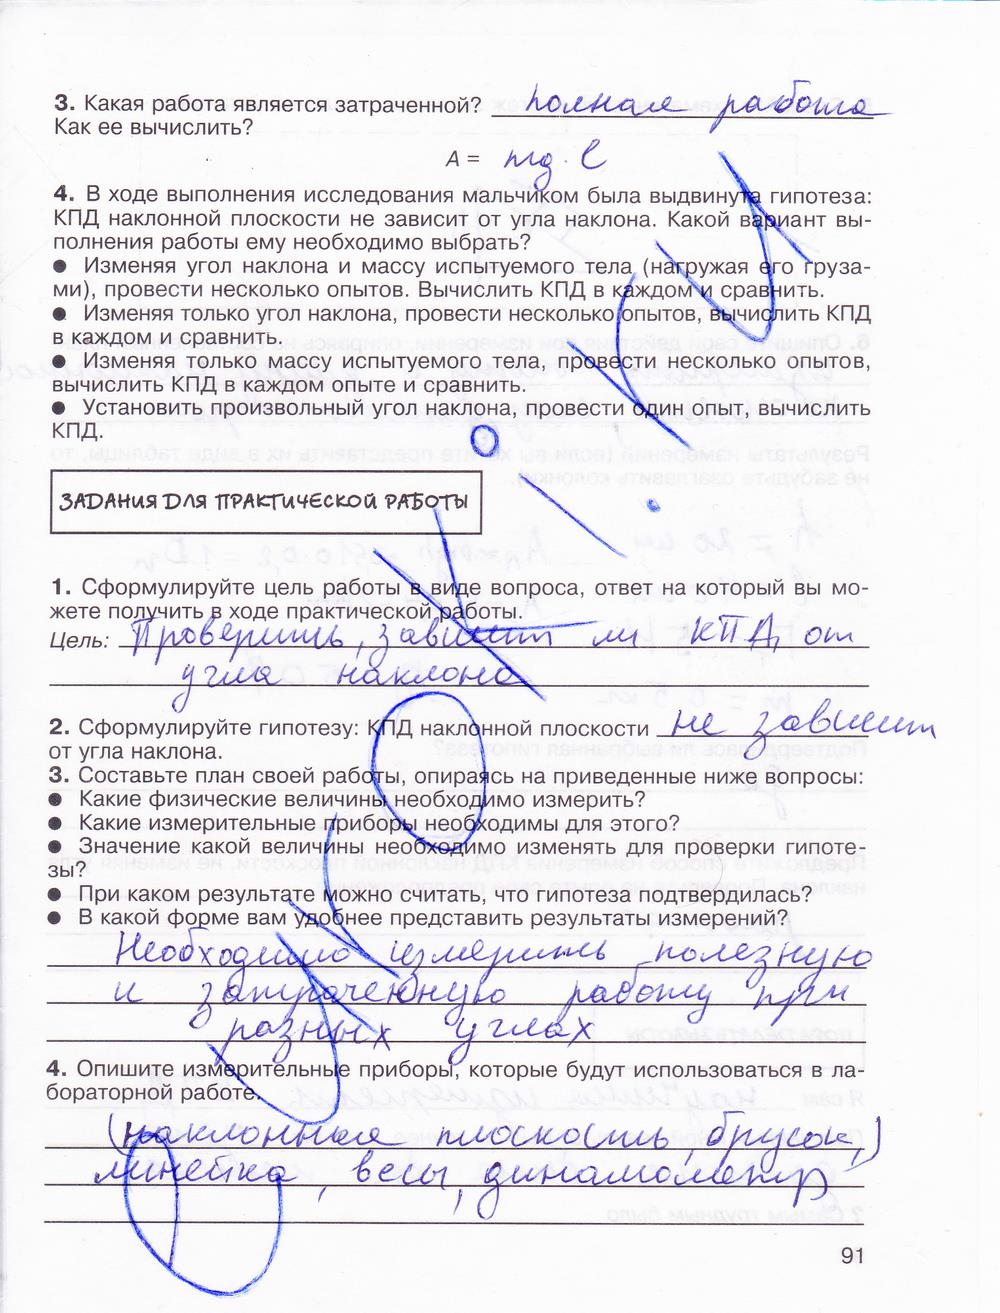 гдз 7 класс рабочая тетрадь страница 91 физика Мартынова, Бовин, Коротаев